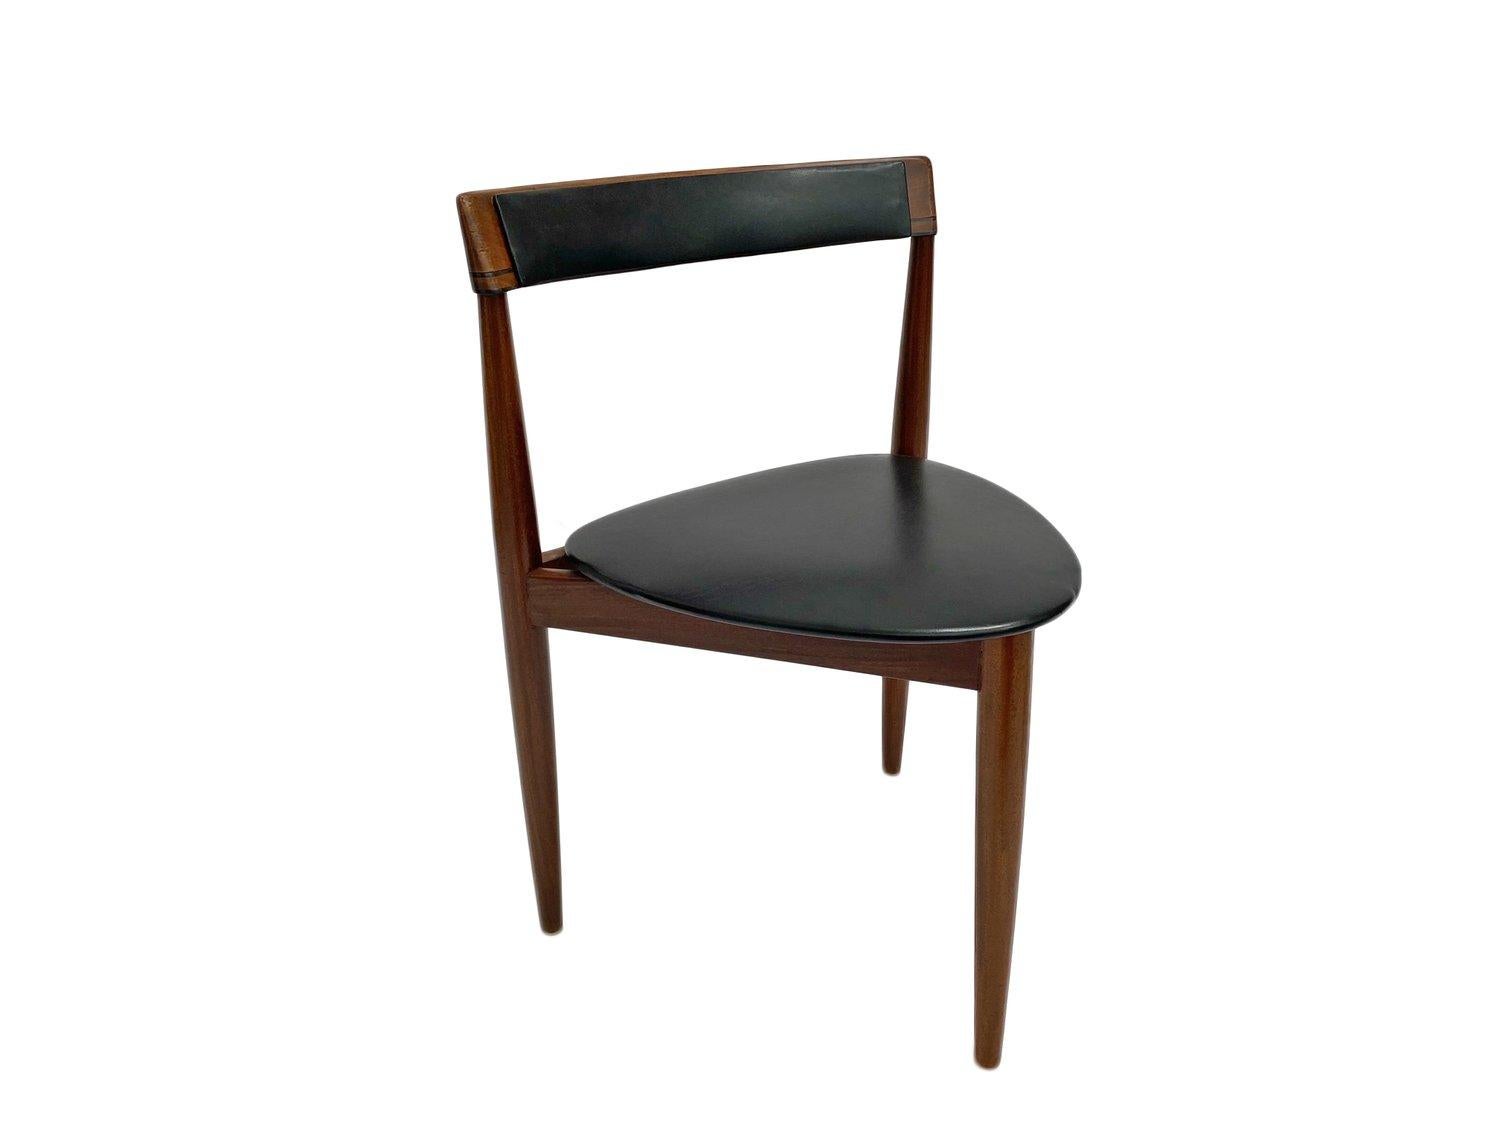 Polished Danish Hans Olsen for Frem Røjle 'Roundette' Series Teak Dining Table and Chairs